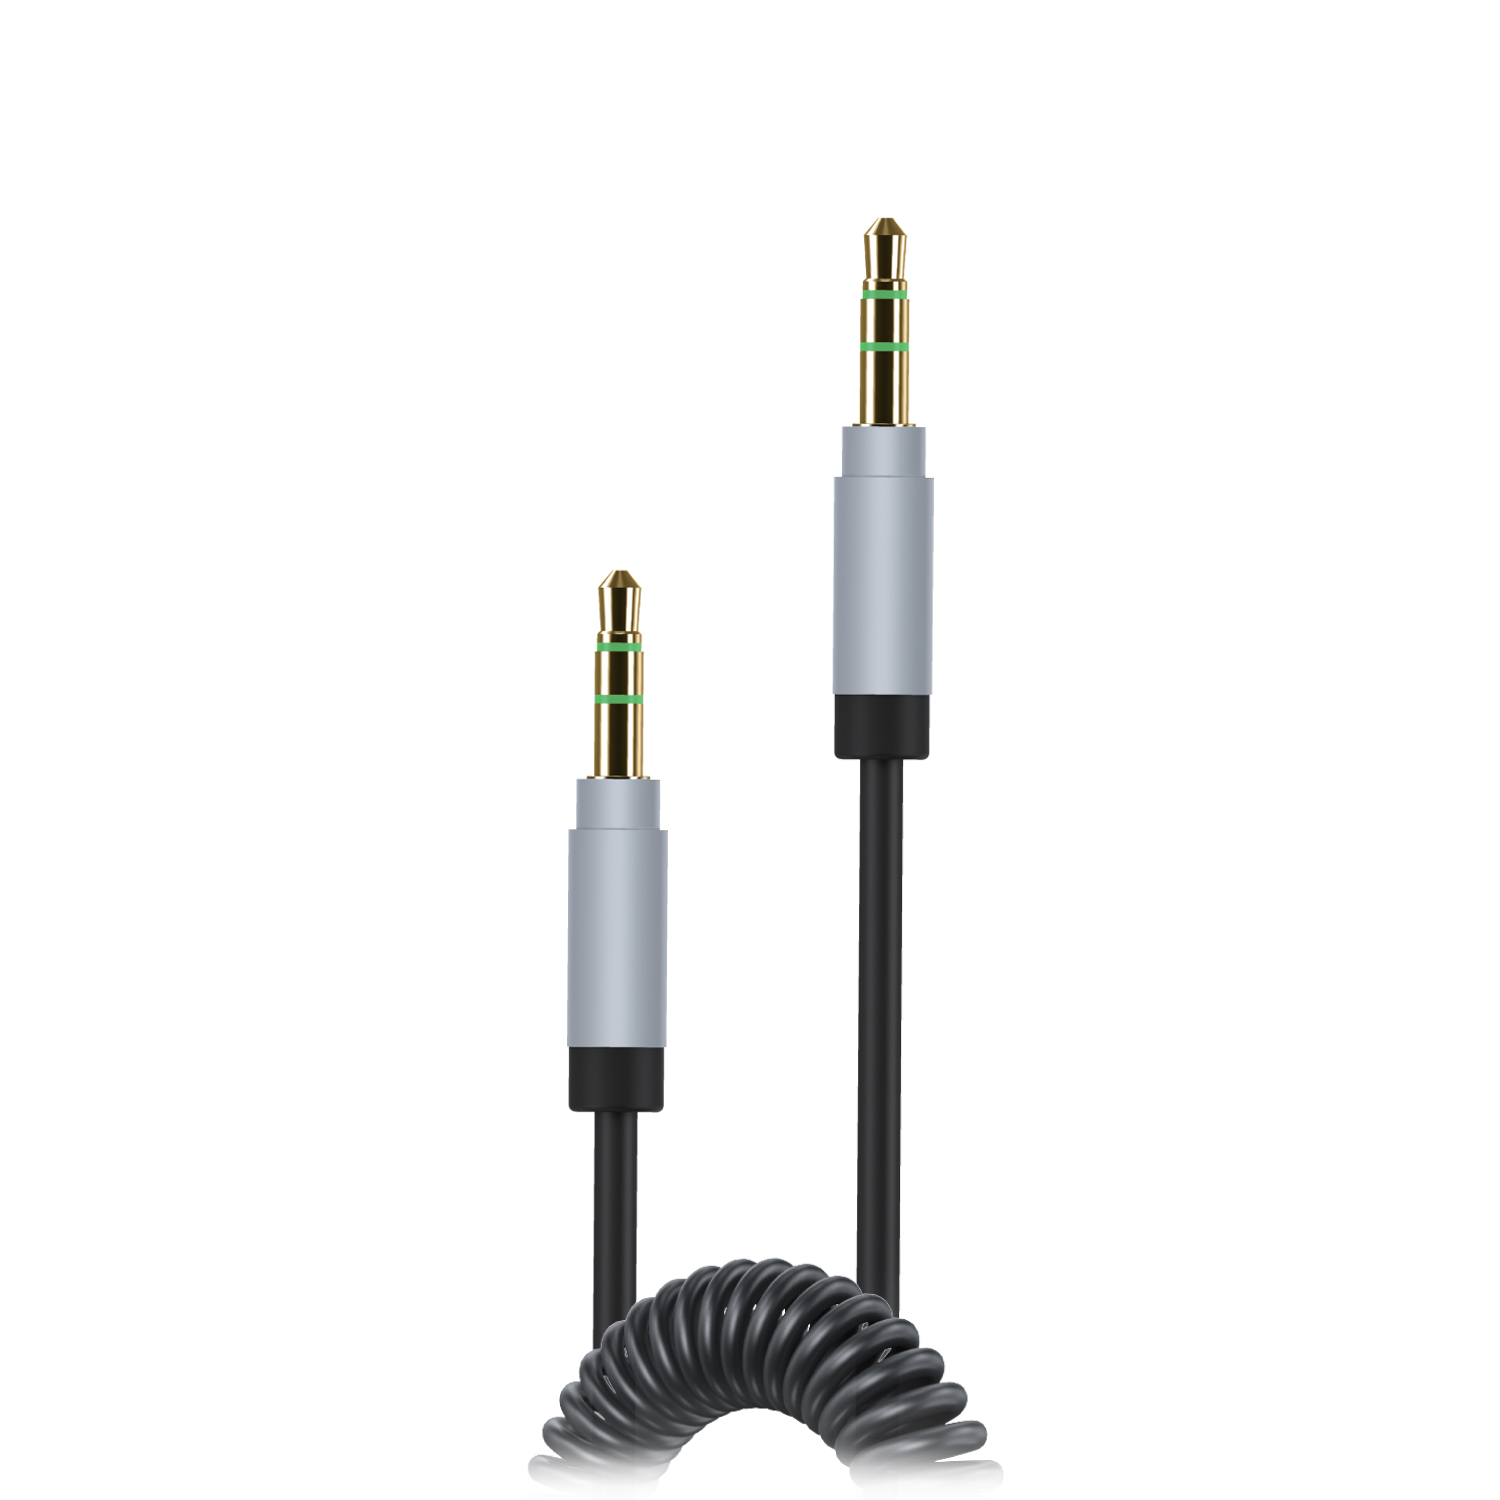 Schneider Double Audio Jack 3.5mm Extensible Cable